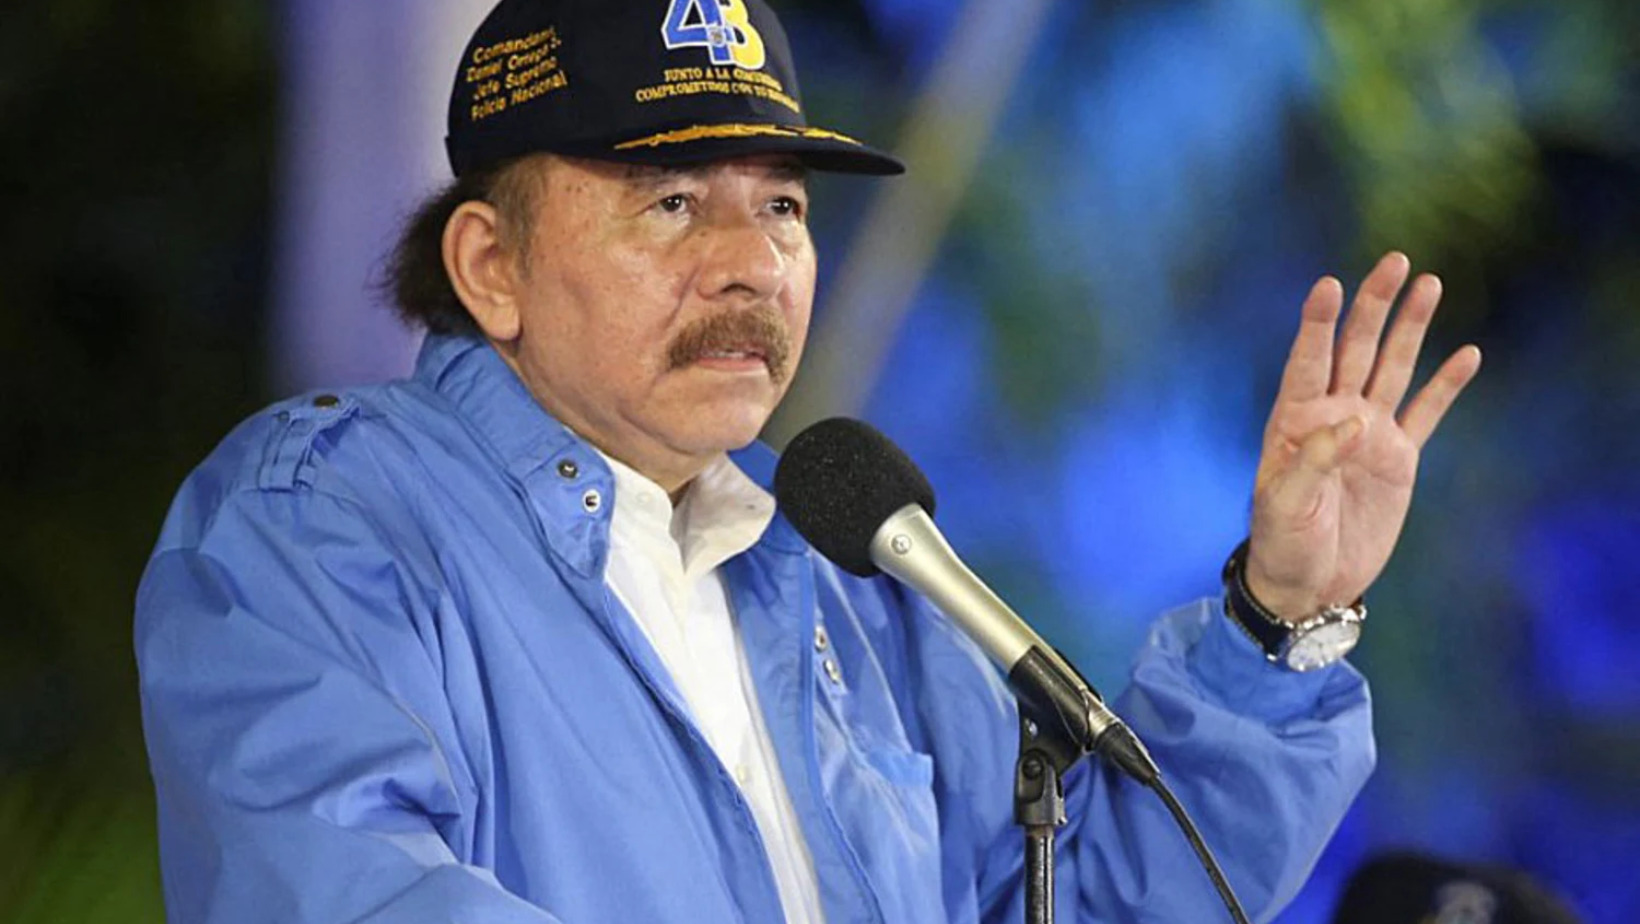 Daniel Ortega, presidente de Nicaragua. FOTO: Fuente externa